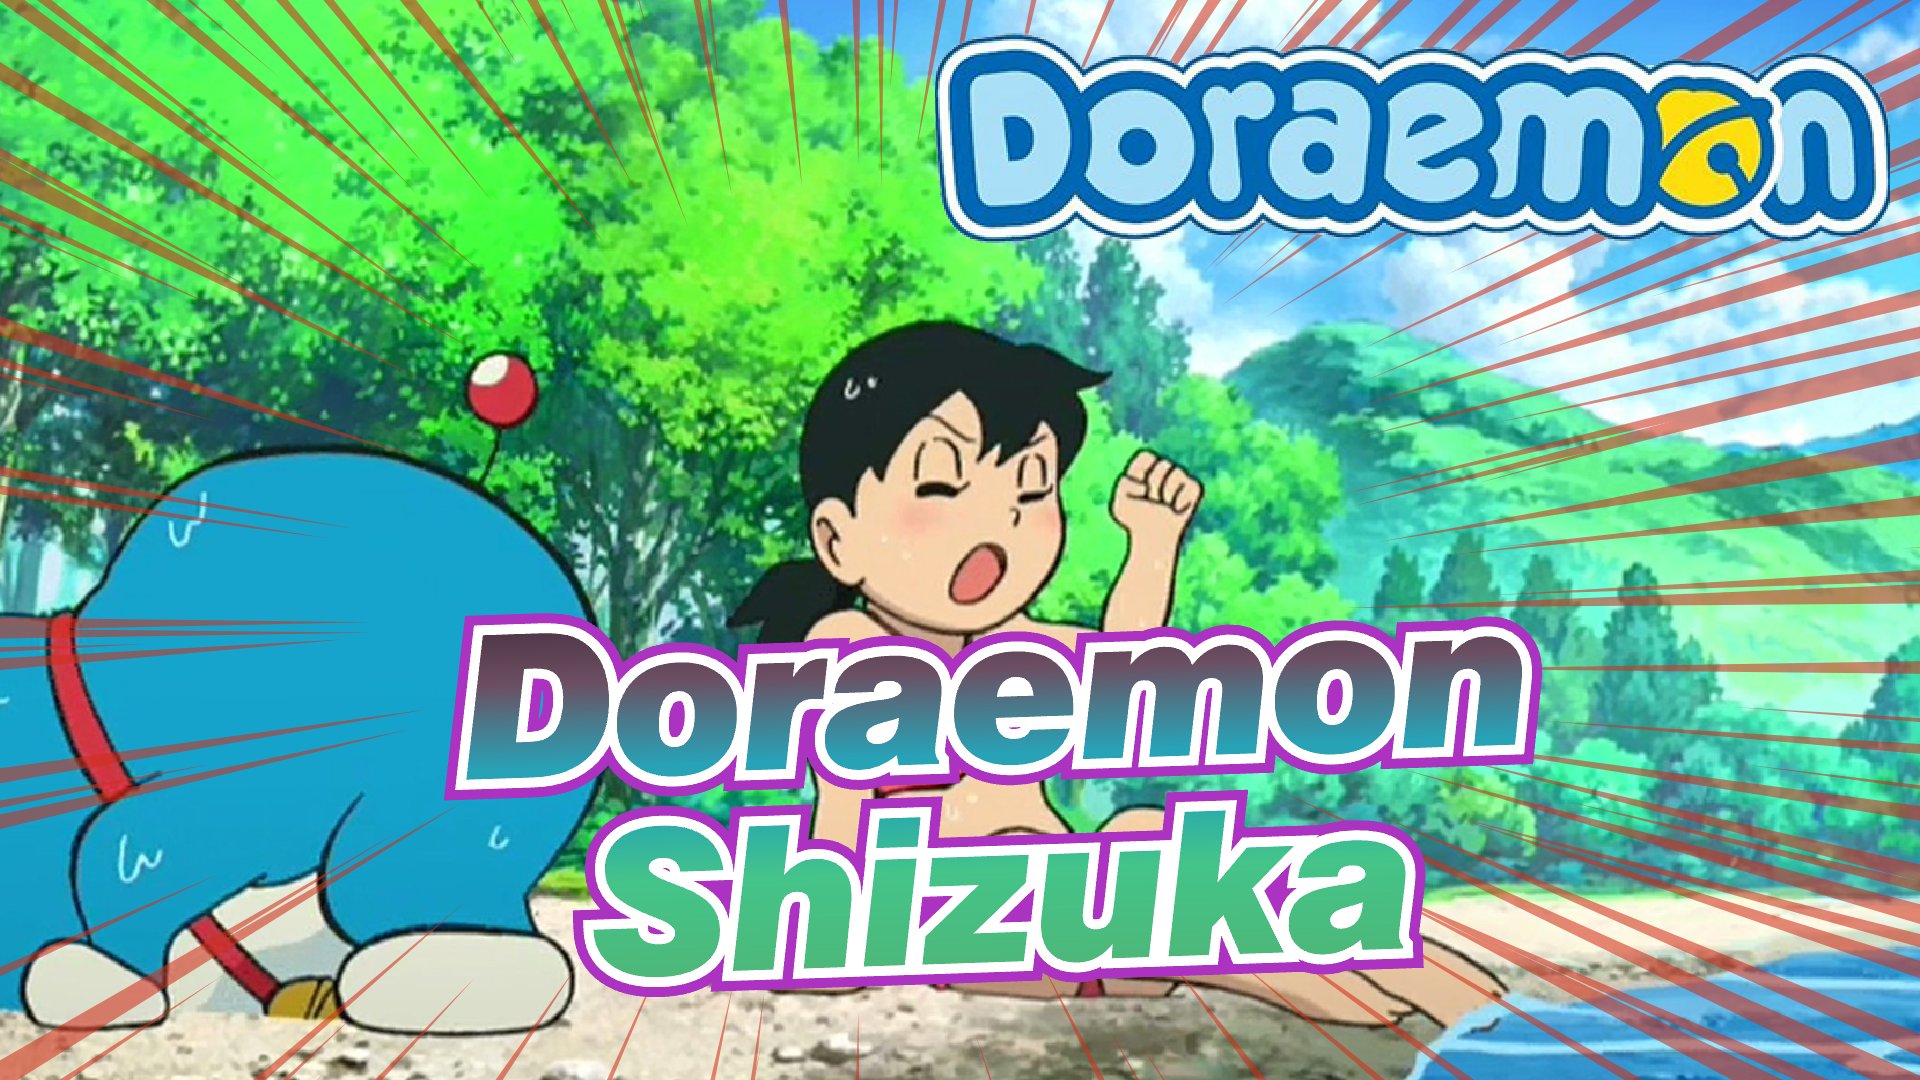 Doraemon] Shizuka's Hilarious Scenes - Bilibili